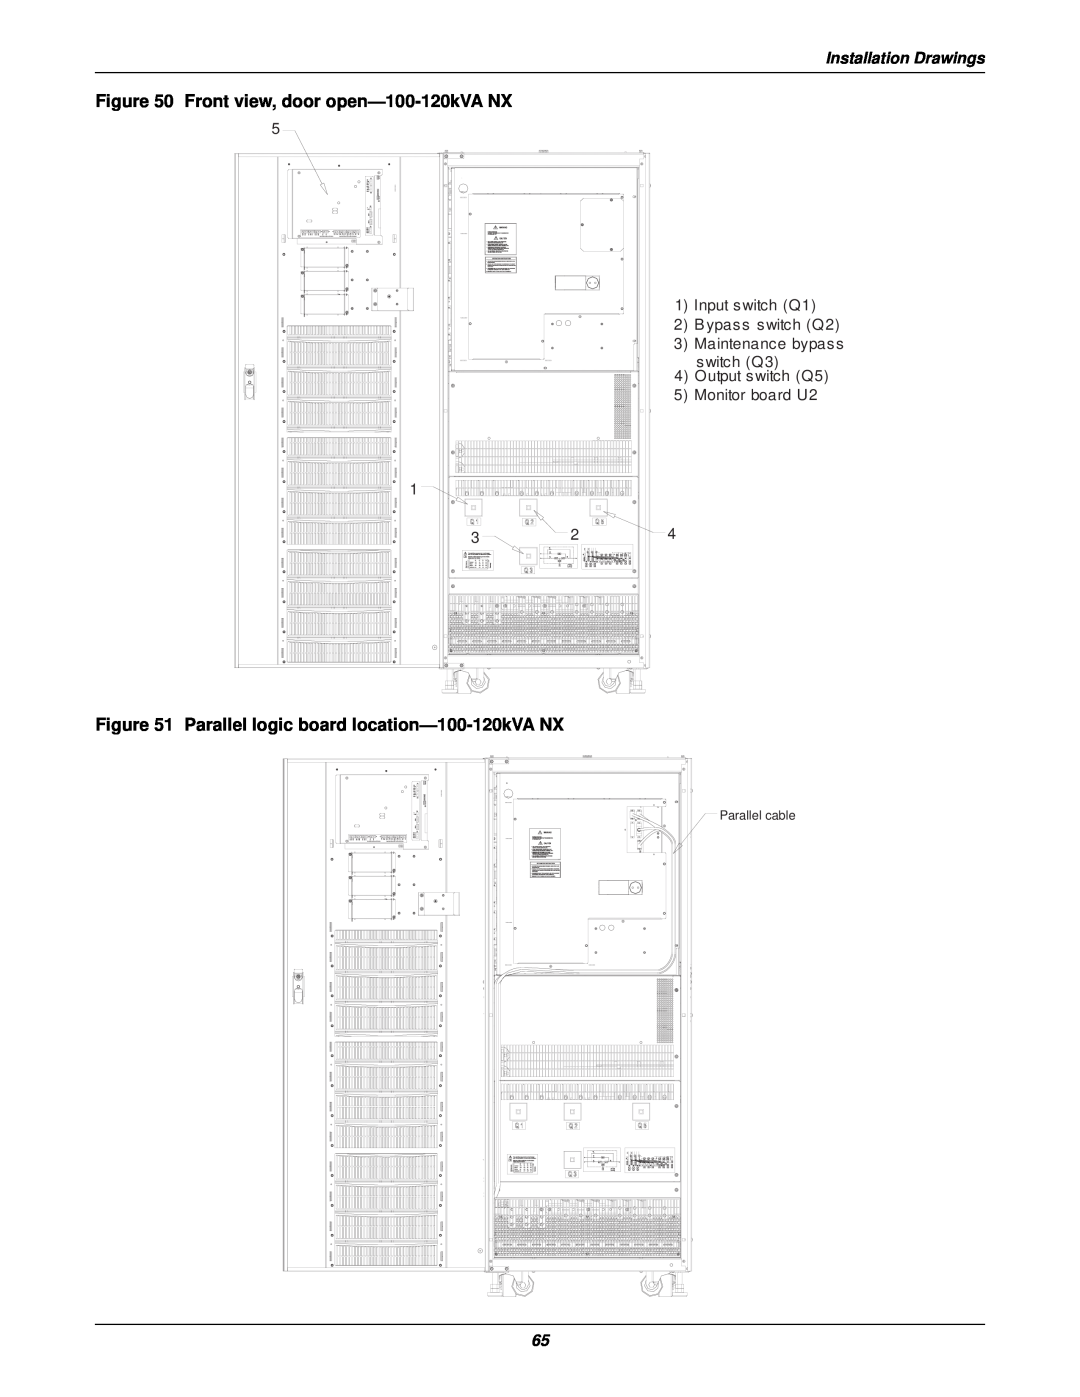 Emerson 30-200kVA Front view, door open-100-120kVA NX, Parallel logic board location-100-120kVA NX, Installation Drawings 